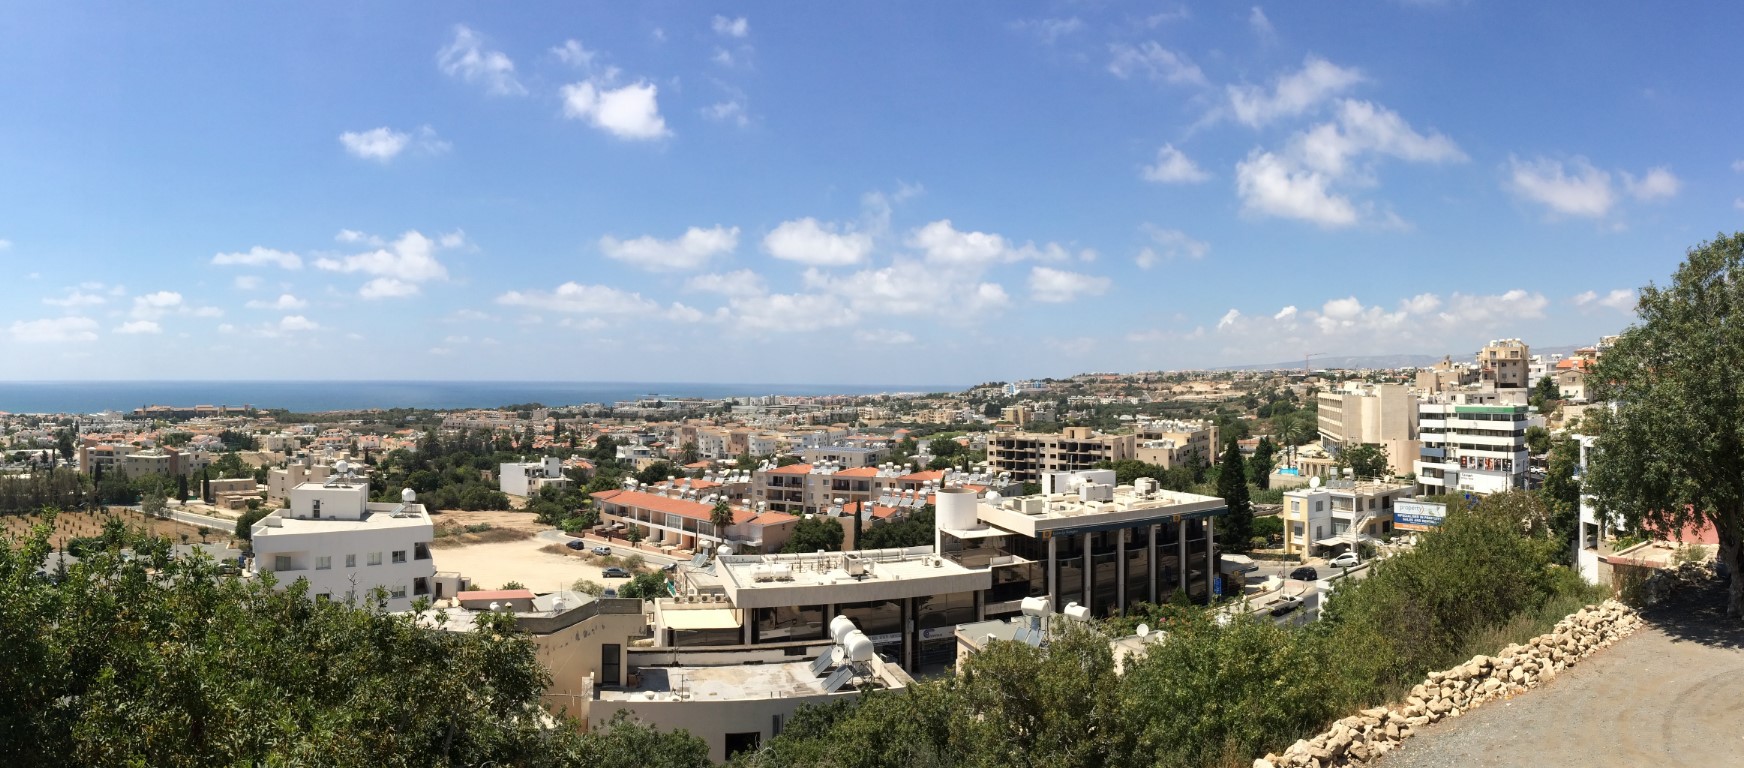 image Paphos struggling to meet rental property demand, students affected